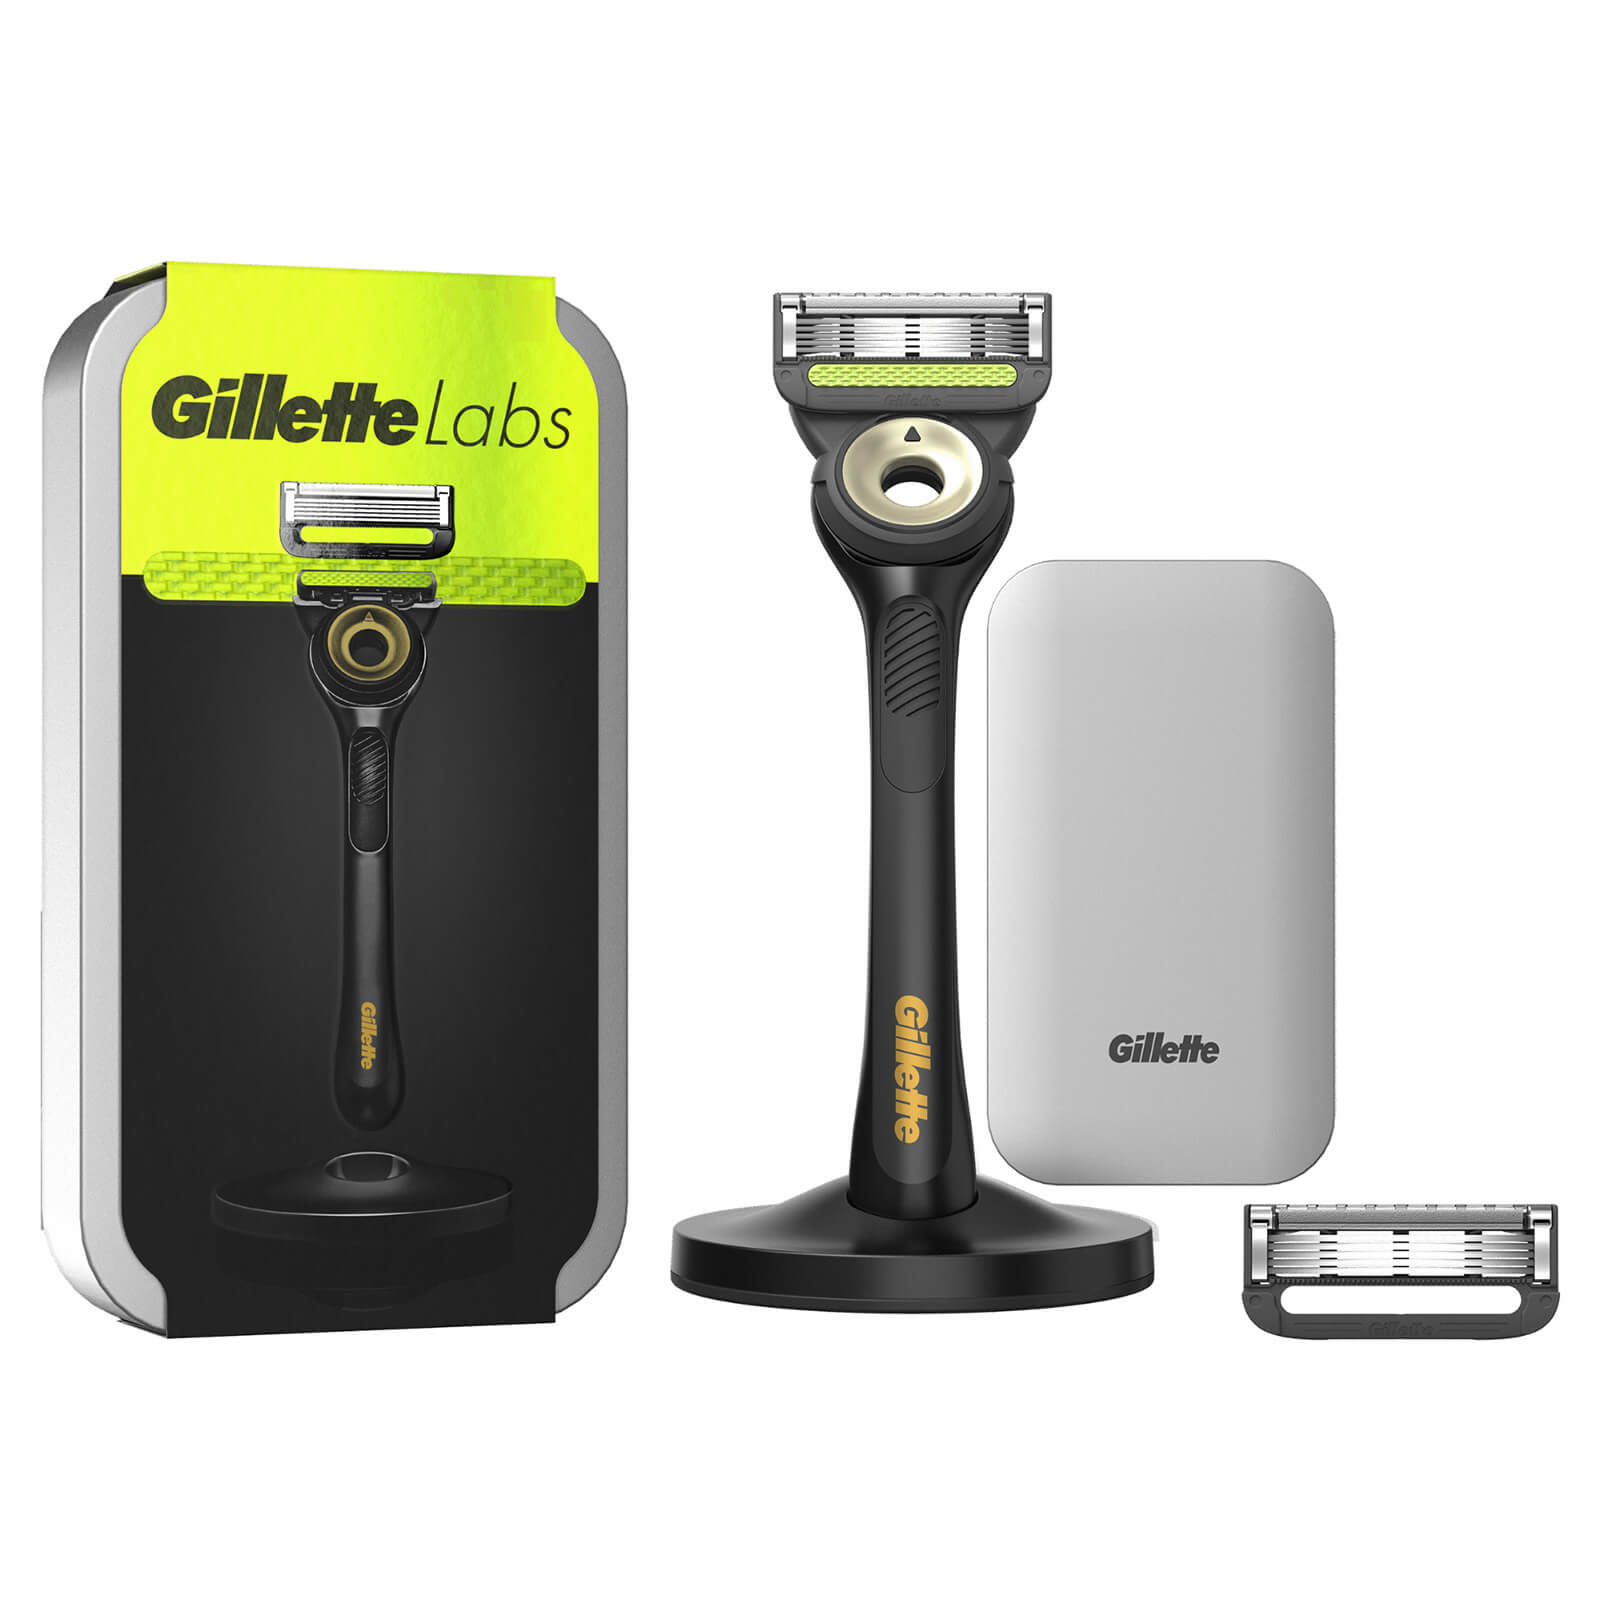 Gillette Labs Razor  Travel Case and 1 Blade Refill - Black & Gold